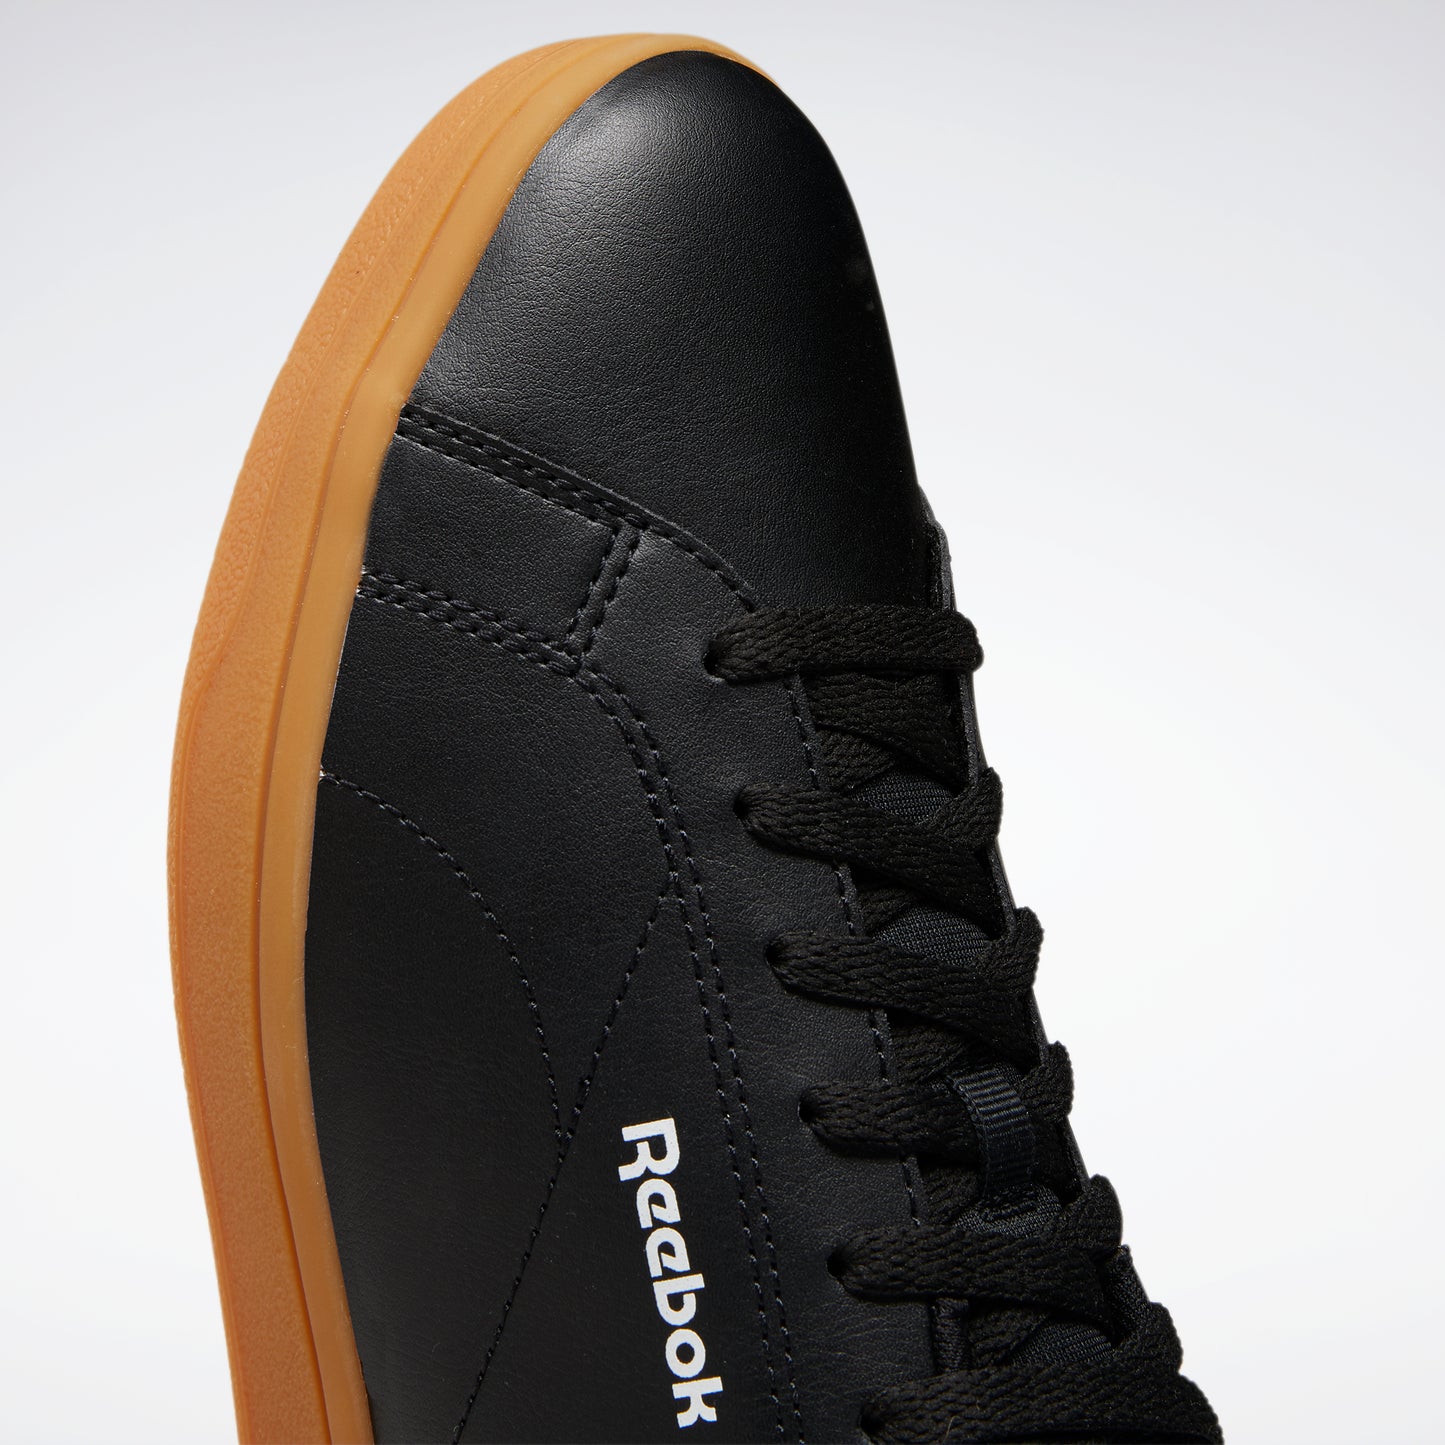 Reebok Royal Complete Clean 2.0 Shoes Black/White